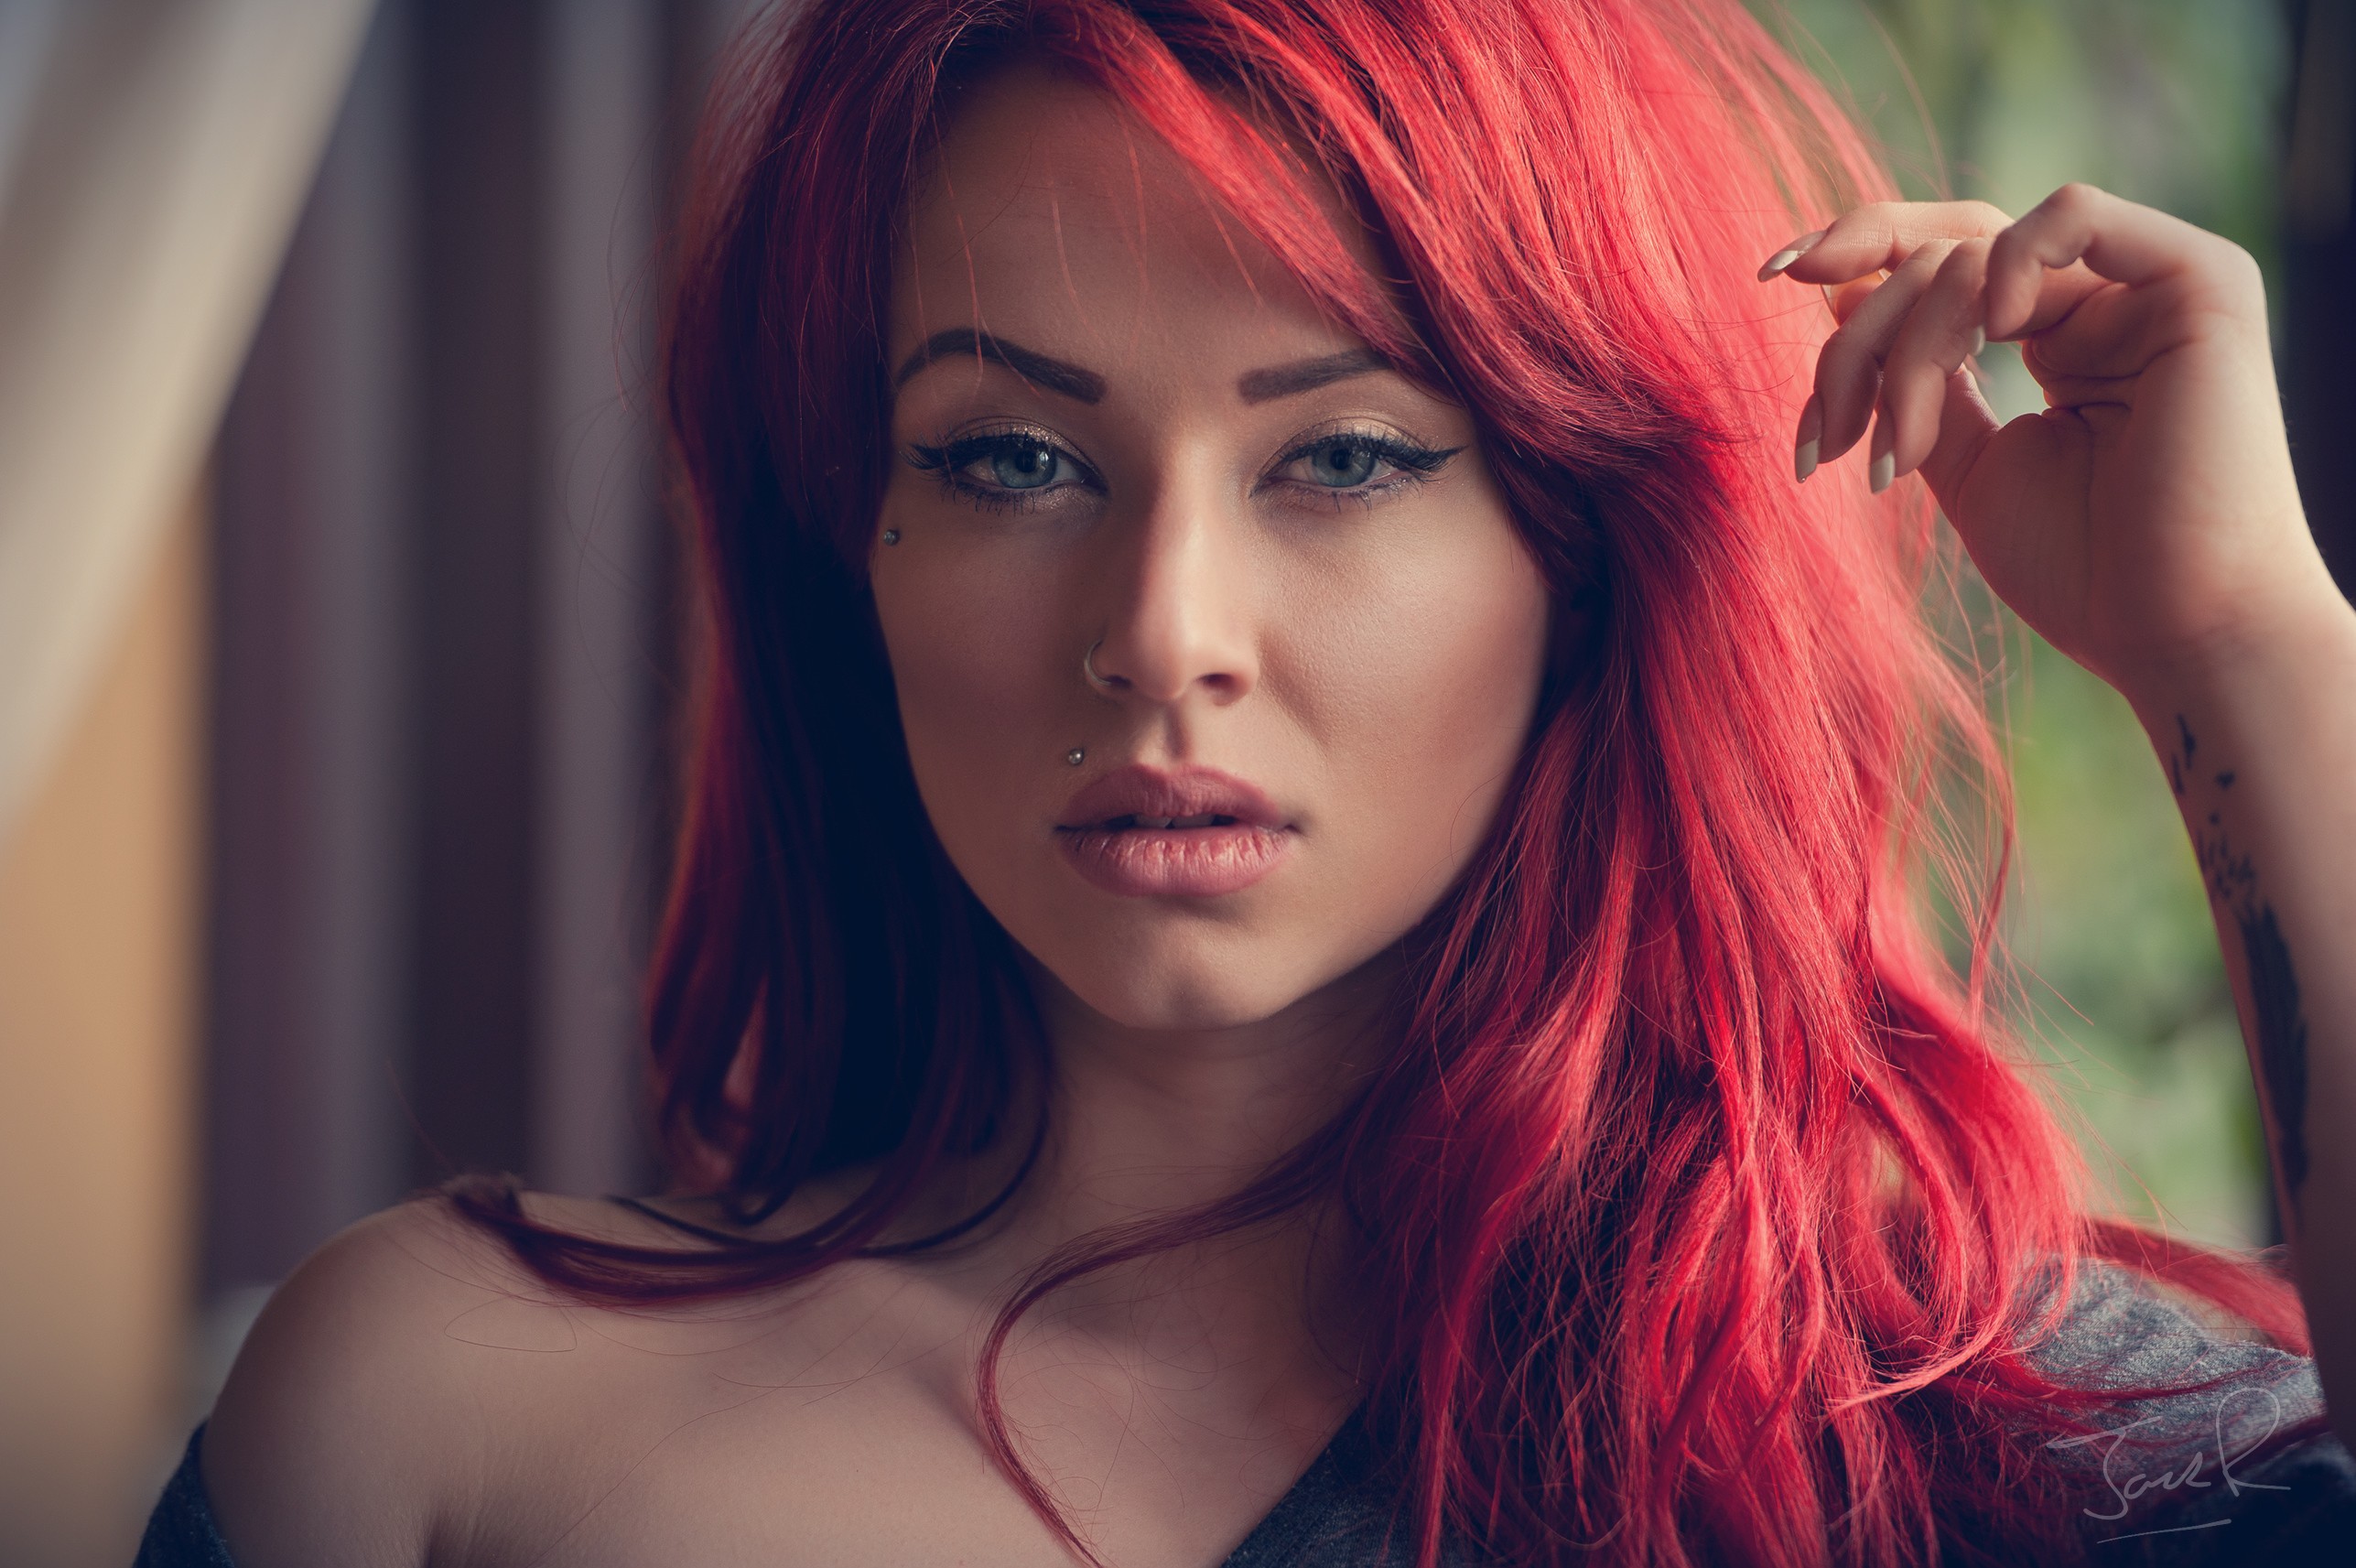 Women Redhead Nose Rings Piercing Tattoo Face Portrait 2014 Year 2574x1713